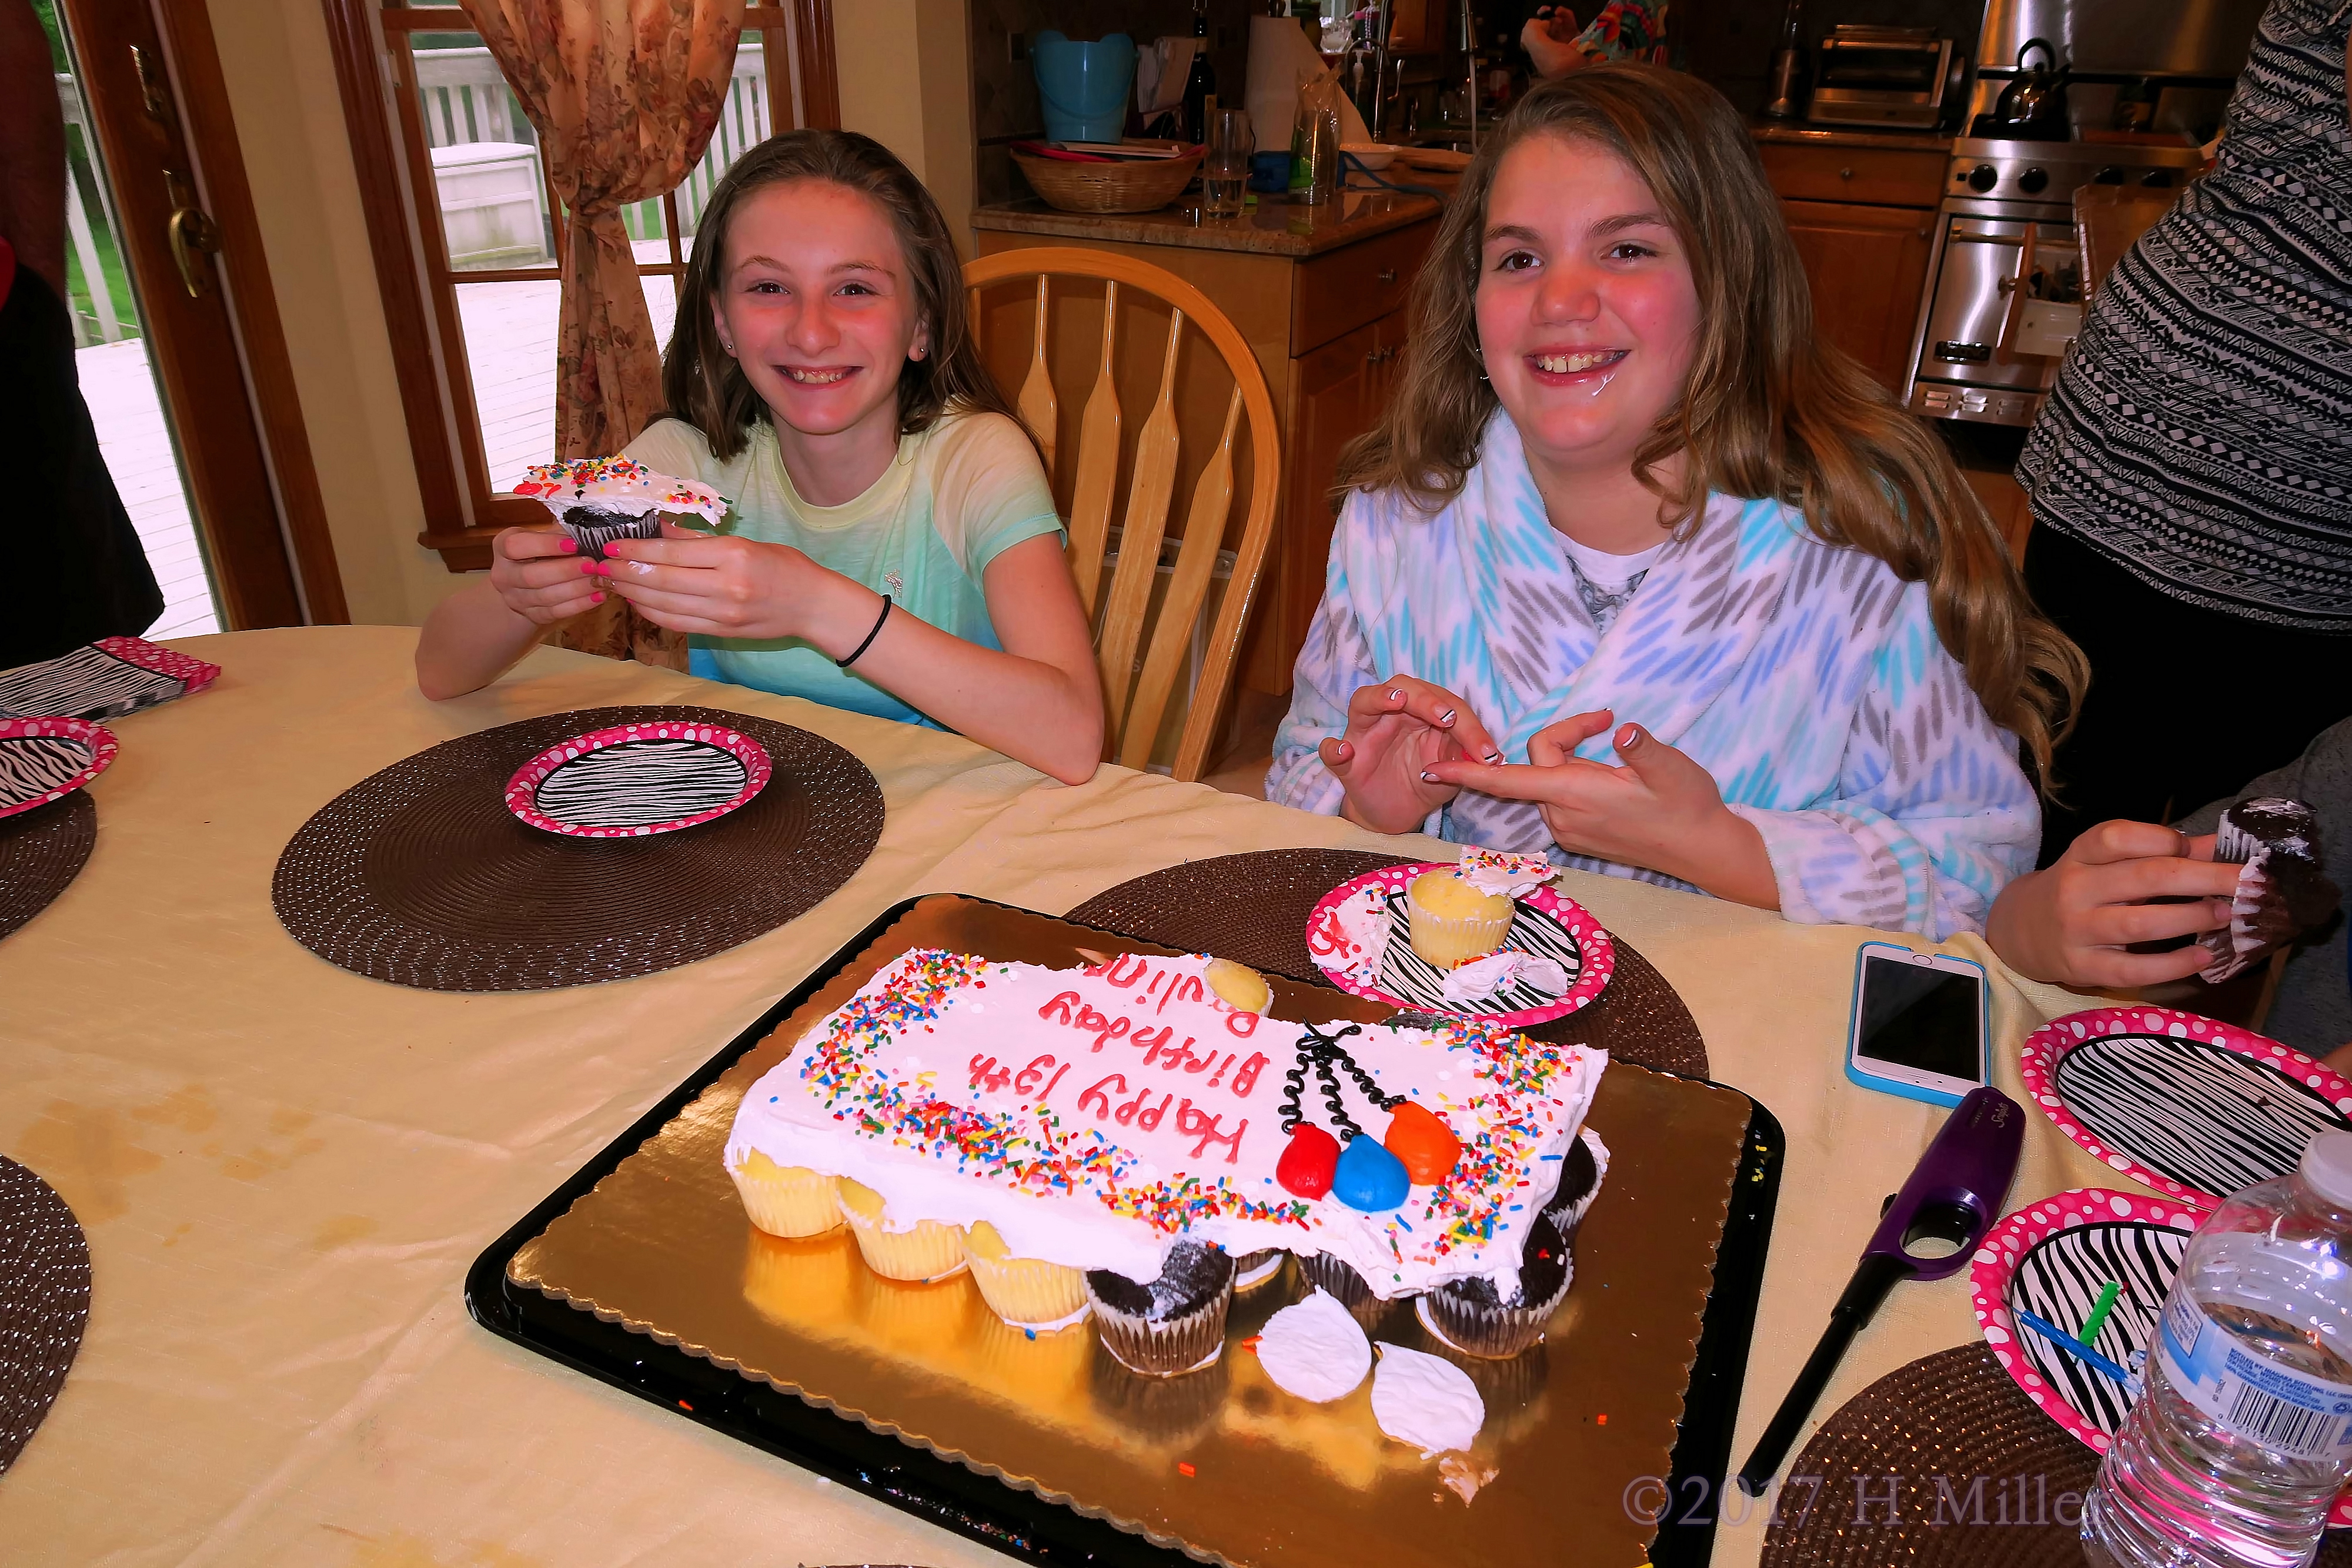 Enjoying Their Share Of Delicious Birthday Cake! 